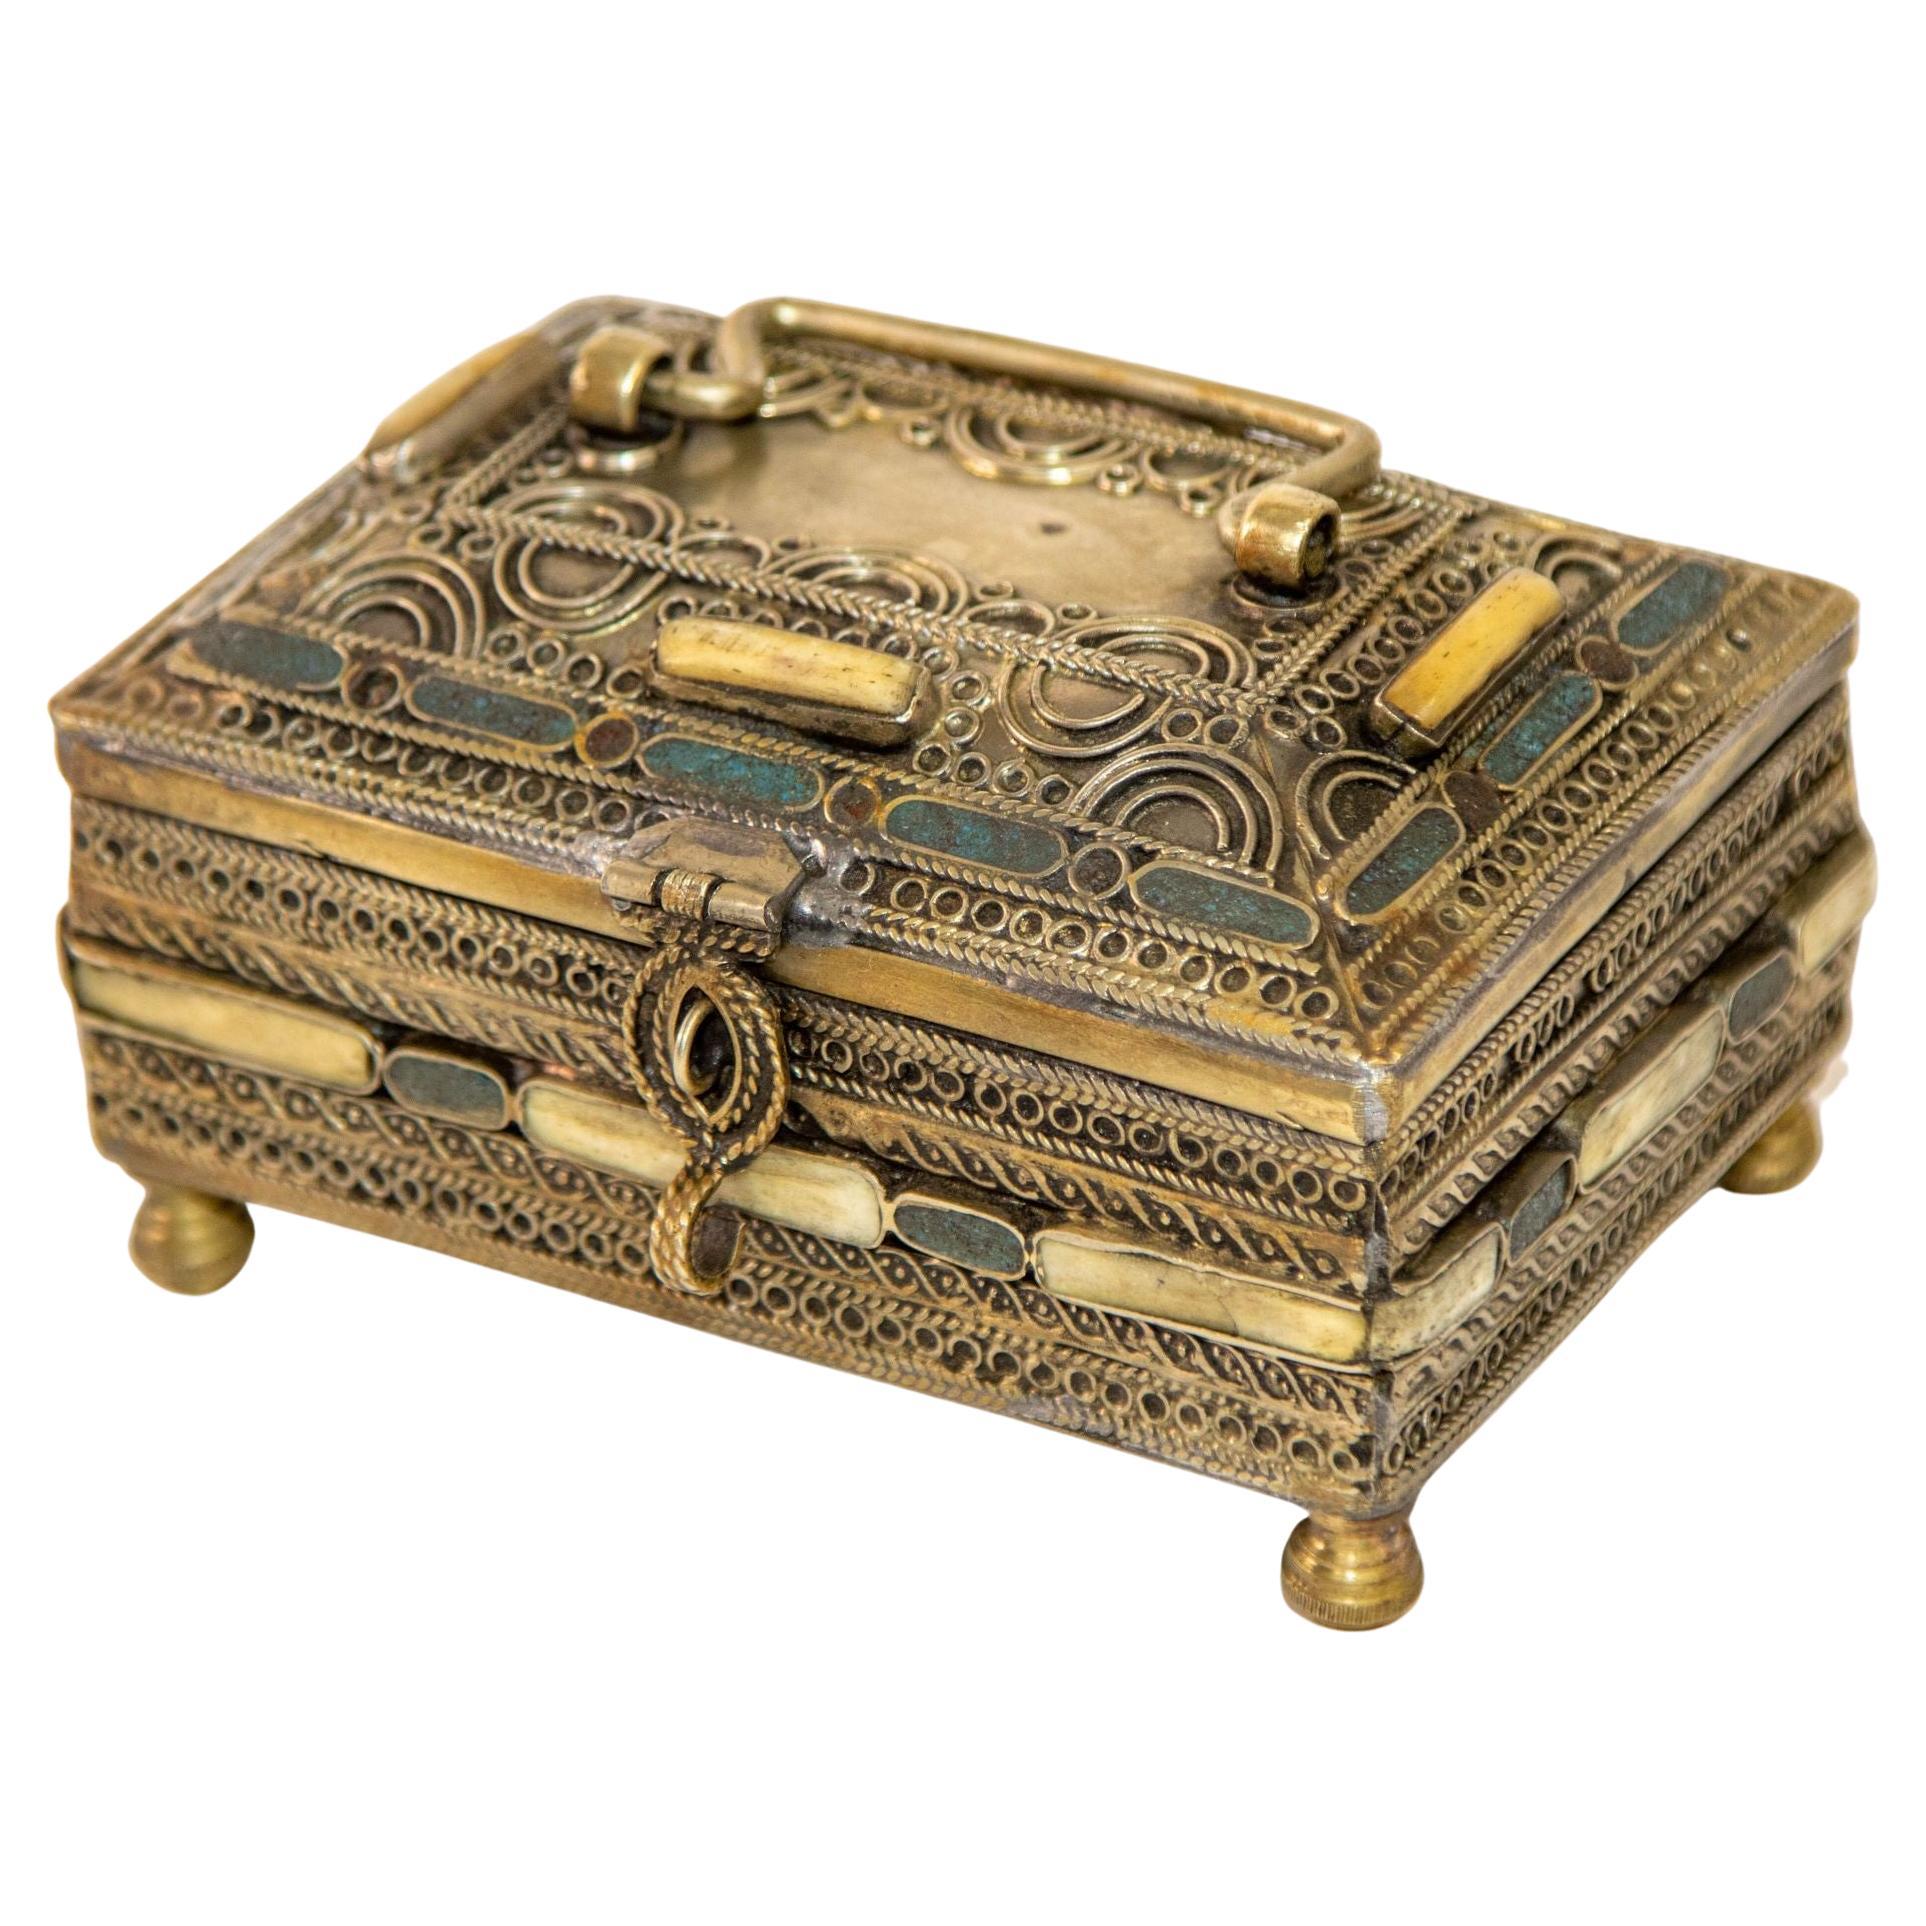 Toledo Spain Silvered Brass and Enamel Jewelry Box Islamic Moorish Style 1940s